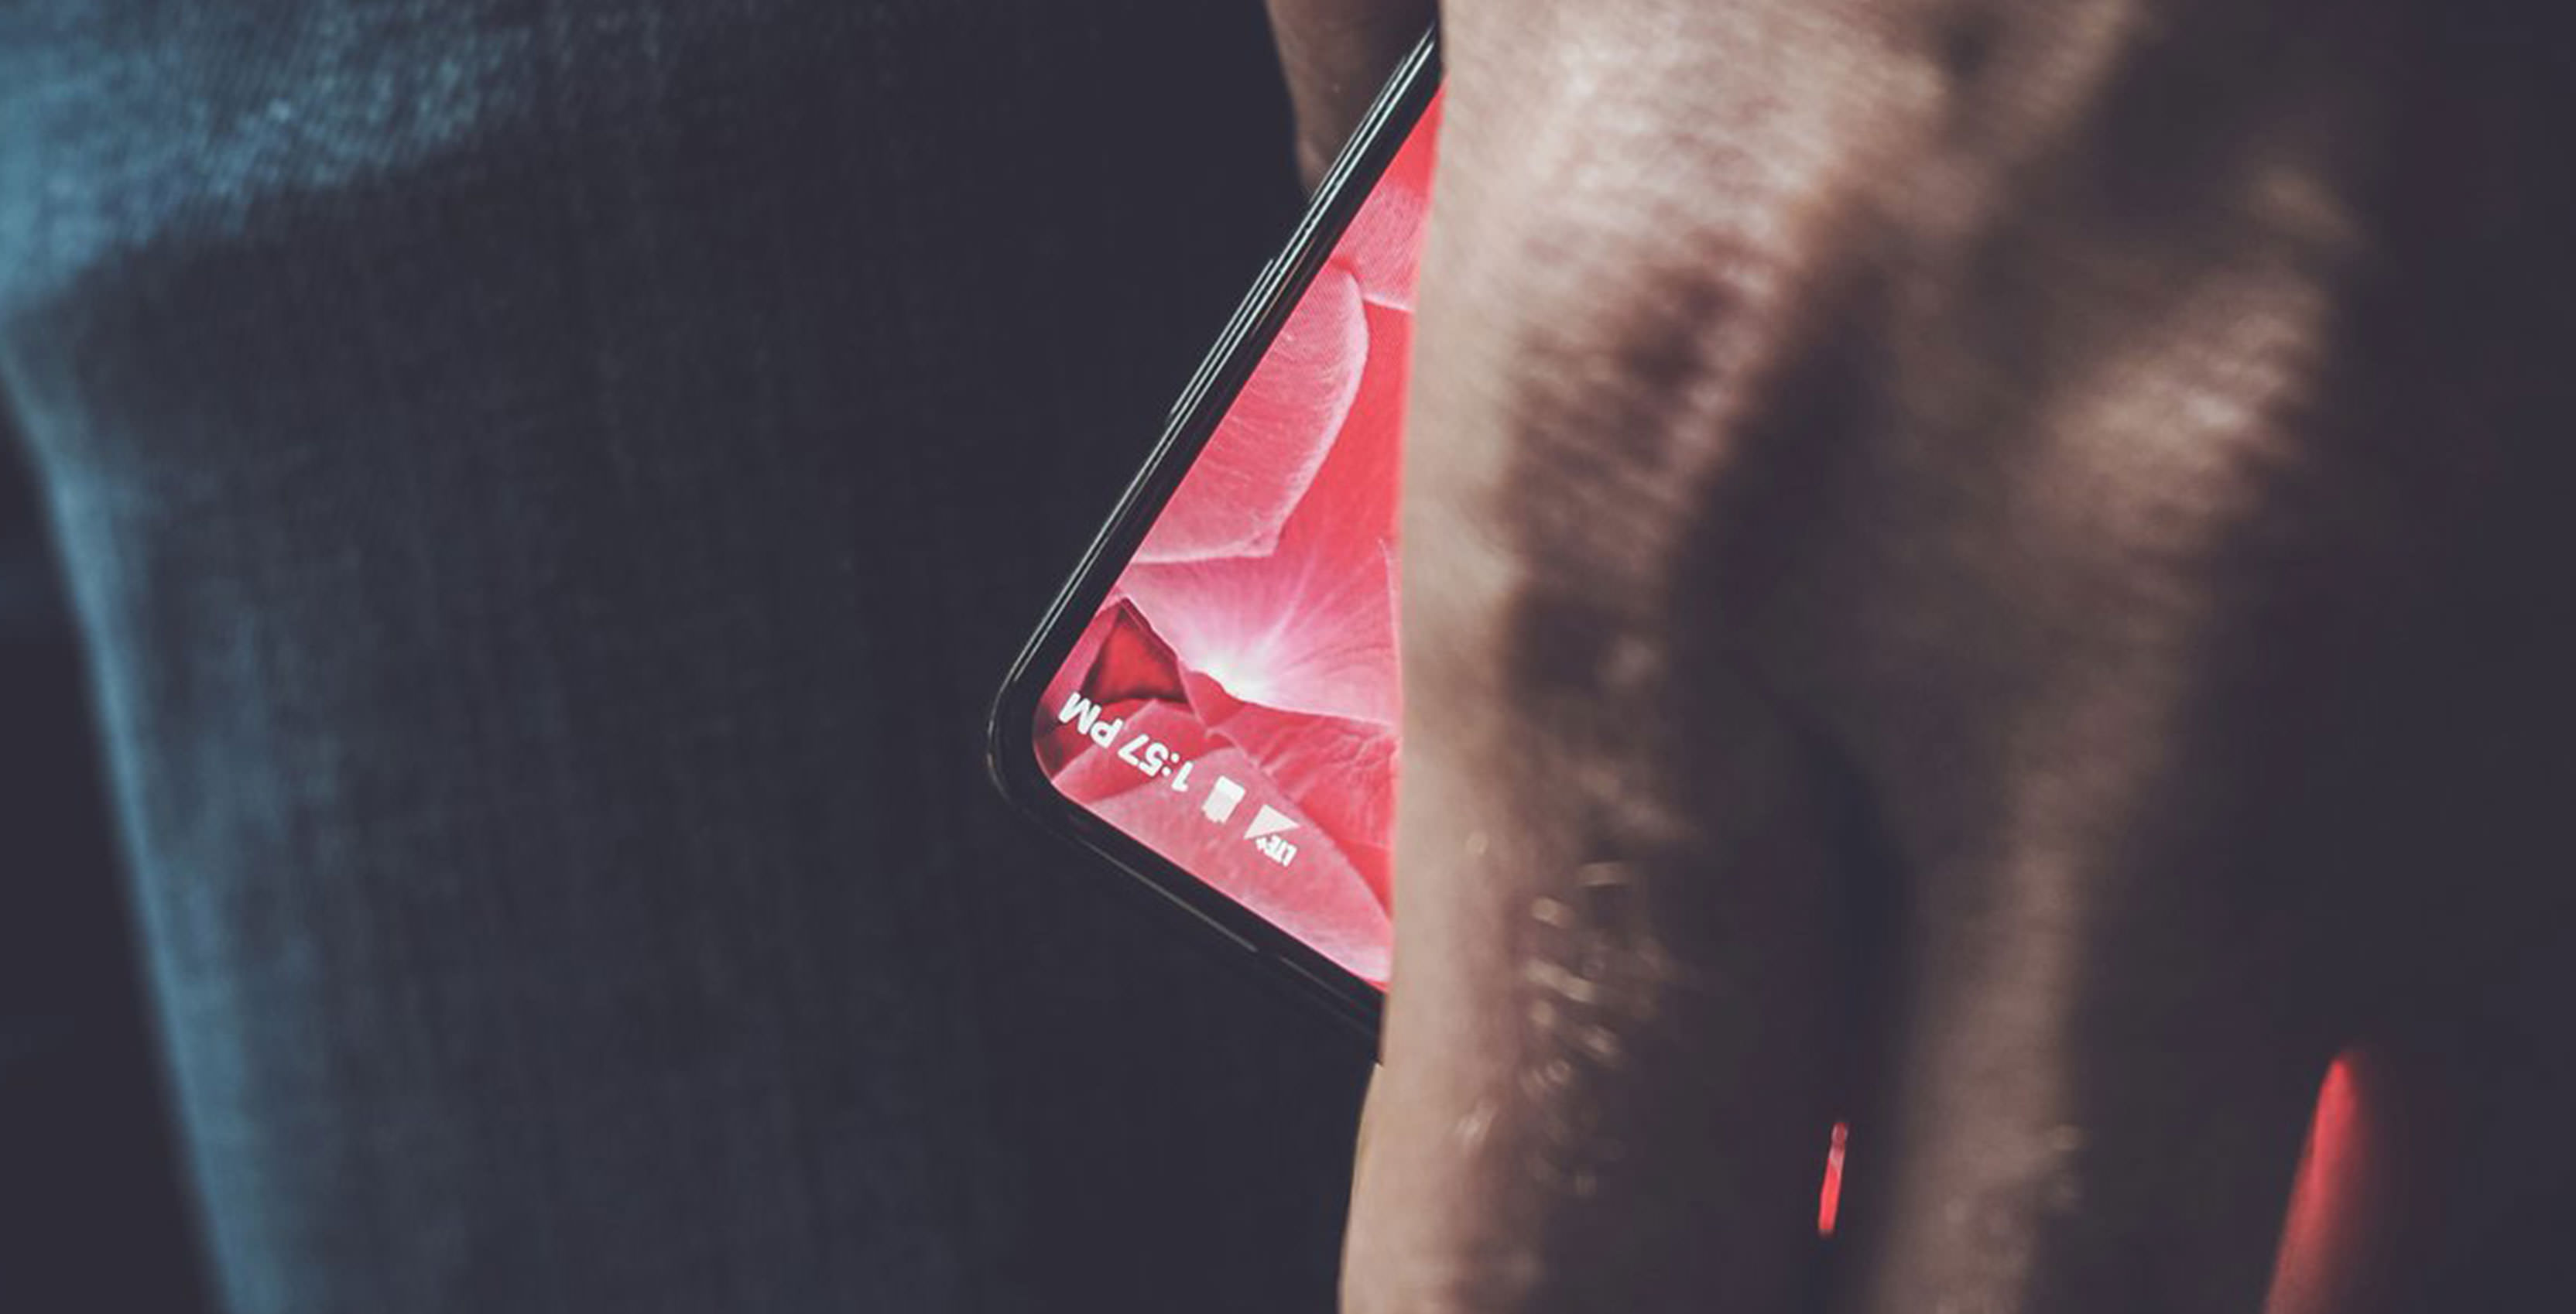 Andy Rubin bezel-less new smartphone